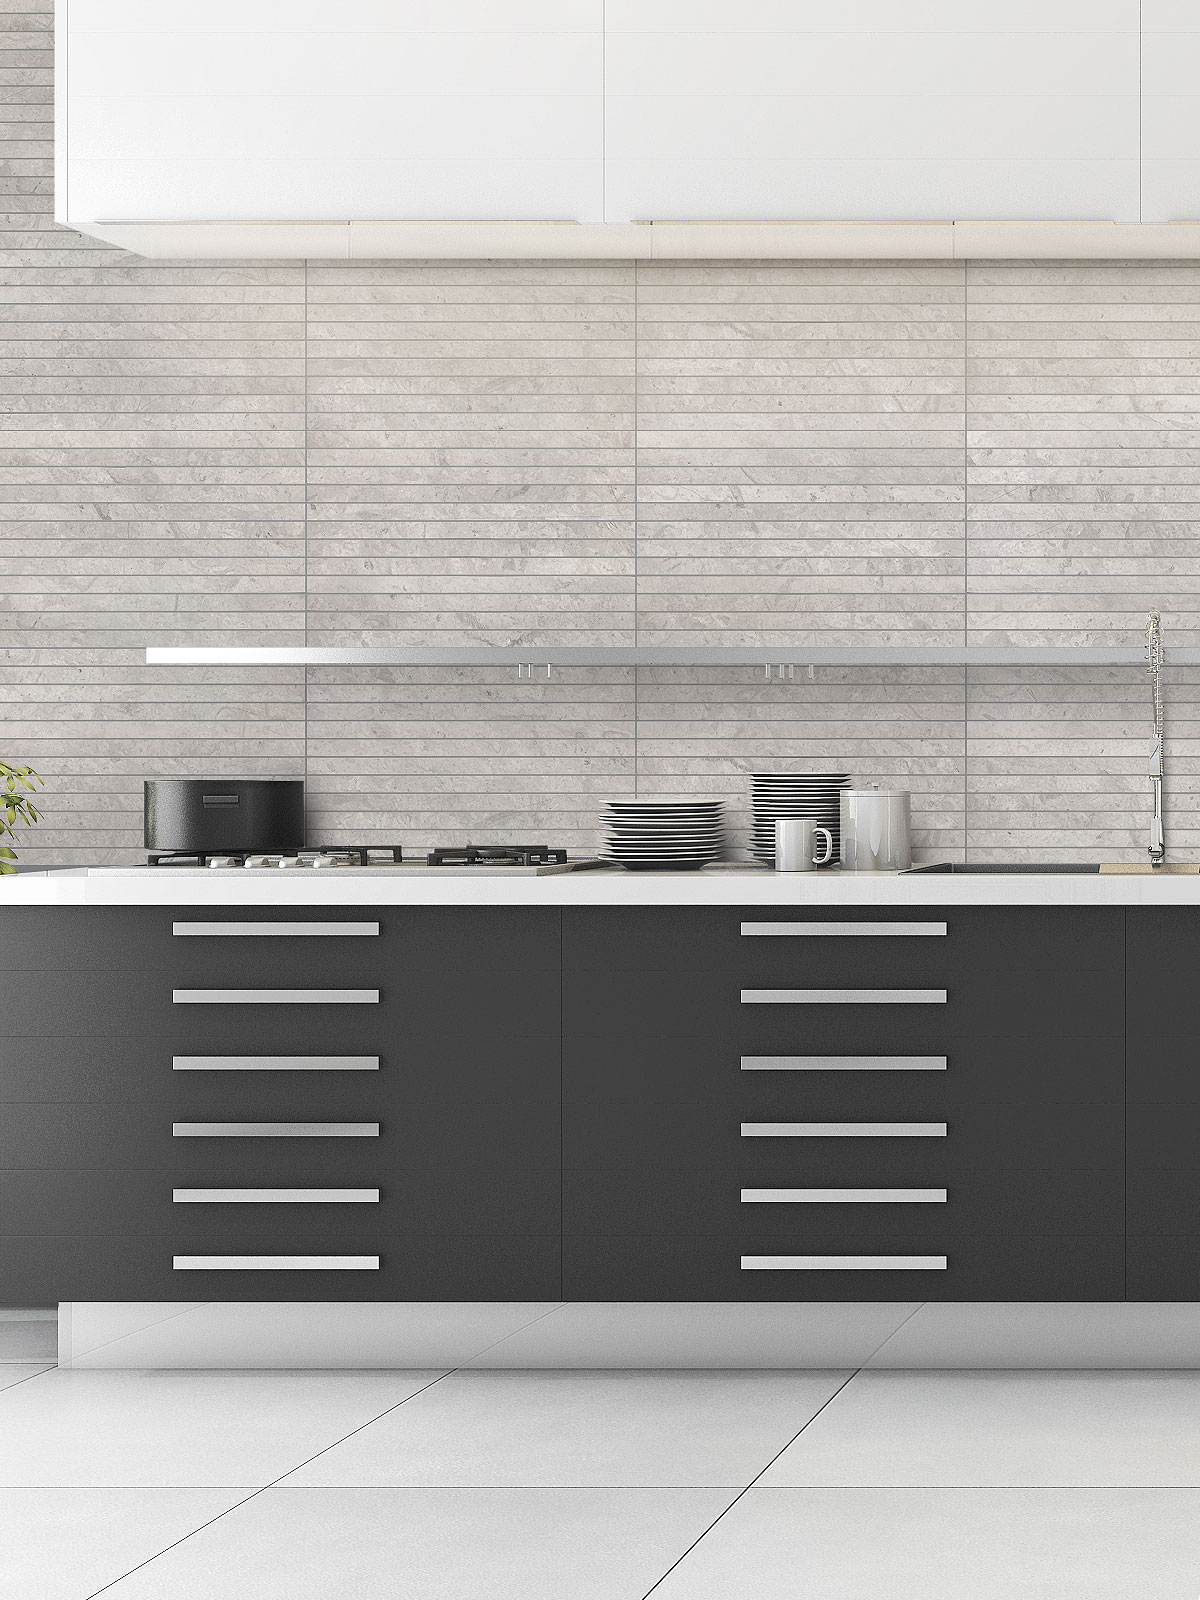 Gray white modern kitchen backsplash tile BA1038 #graybacksplash #limestonebacksplash #modernbacksplash #modernkitchen #graykitchen #graycabinetbacksplash